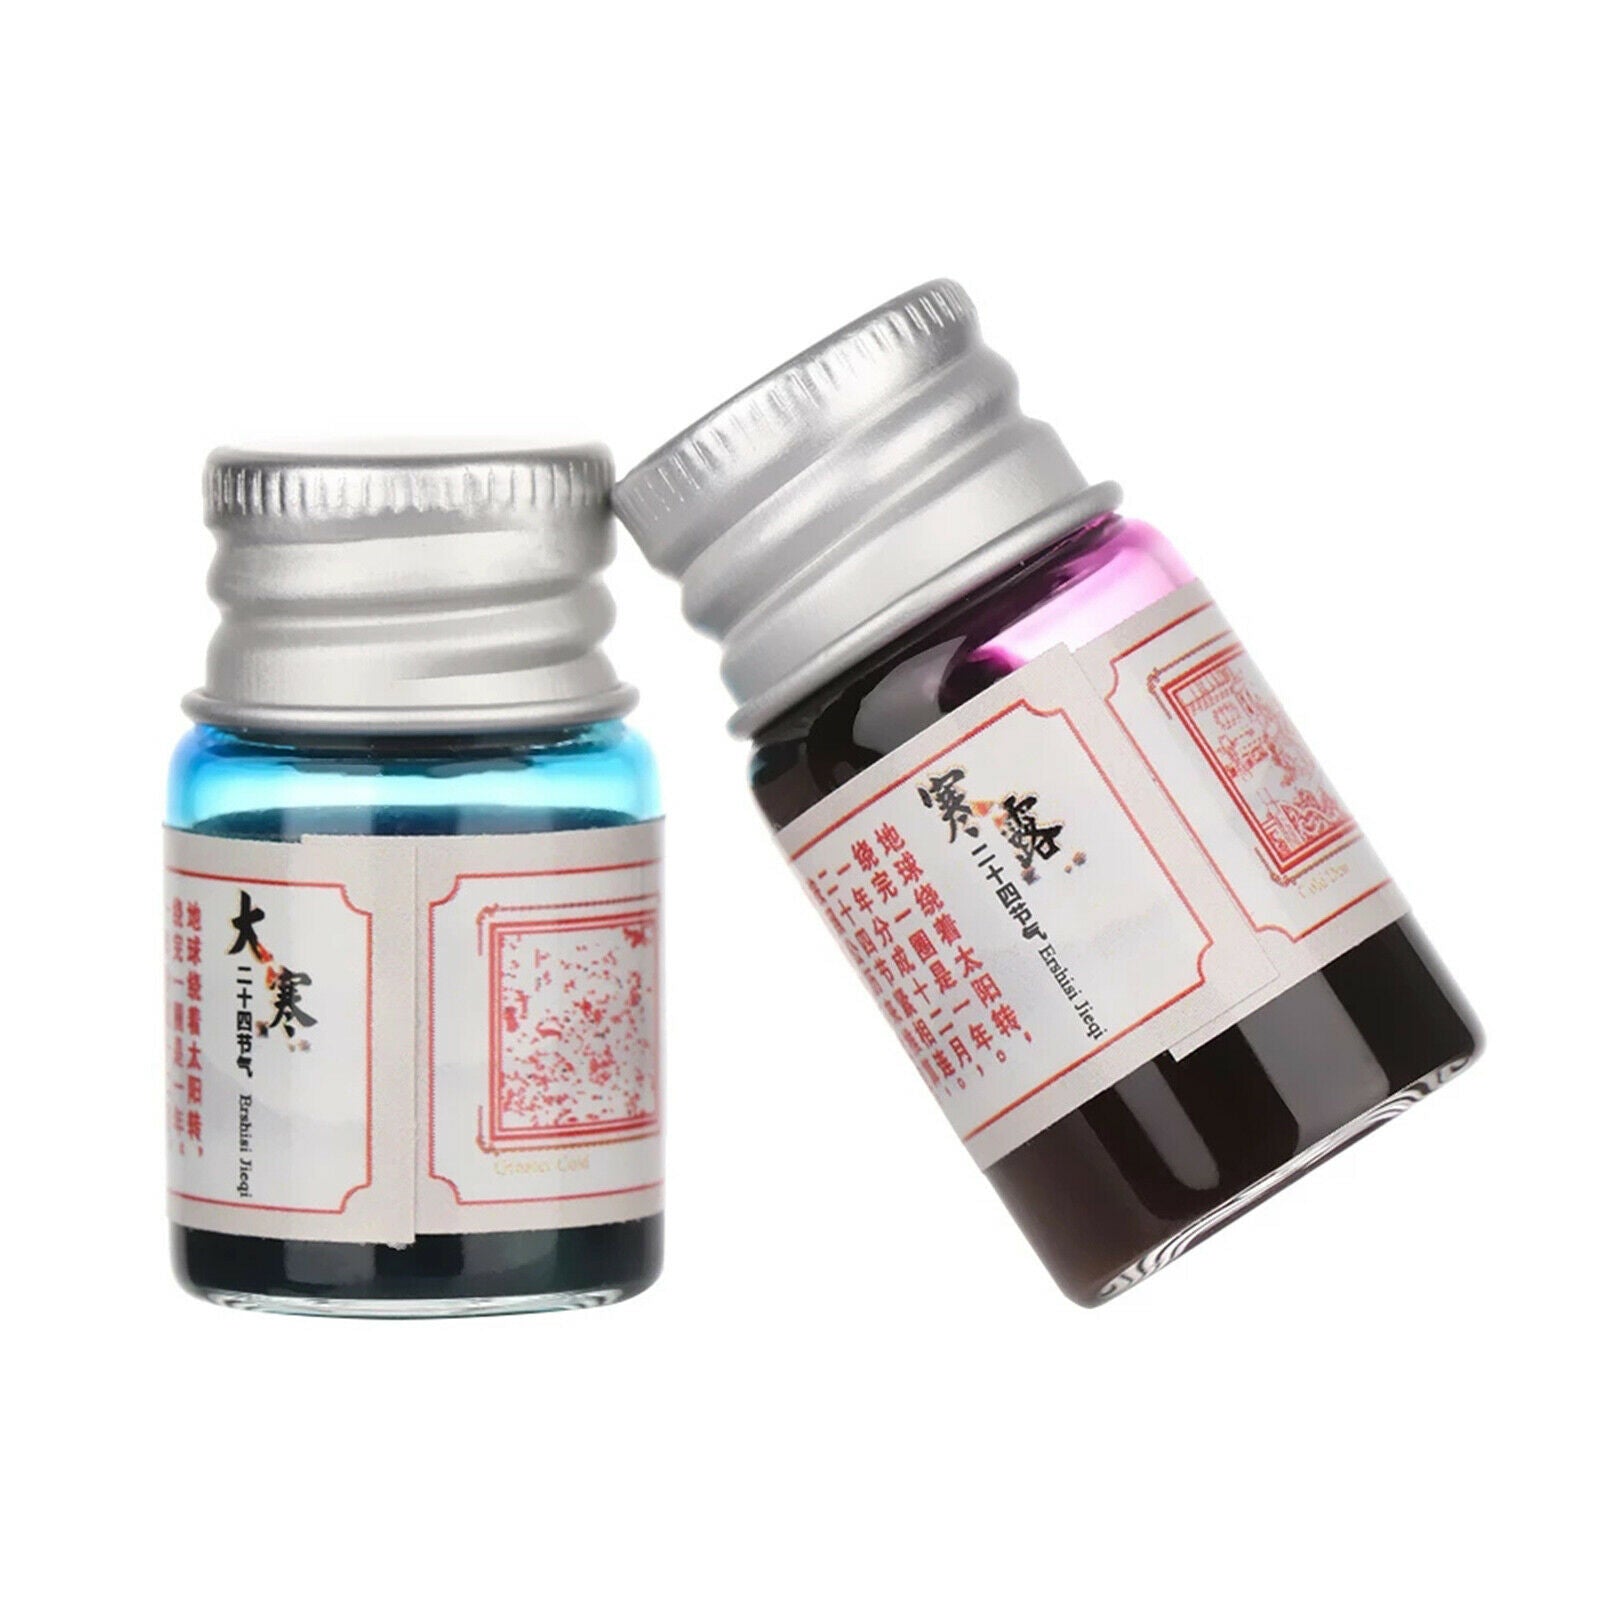 24x 7ml Calligraphy Pen Ink Set Bottled Fountain Glass Dip Pen Inks Supplies